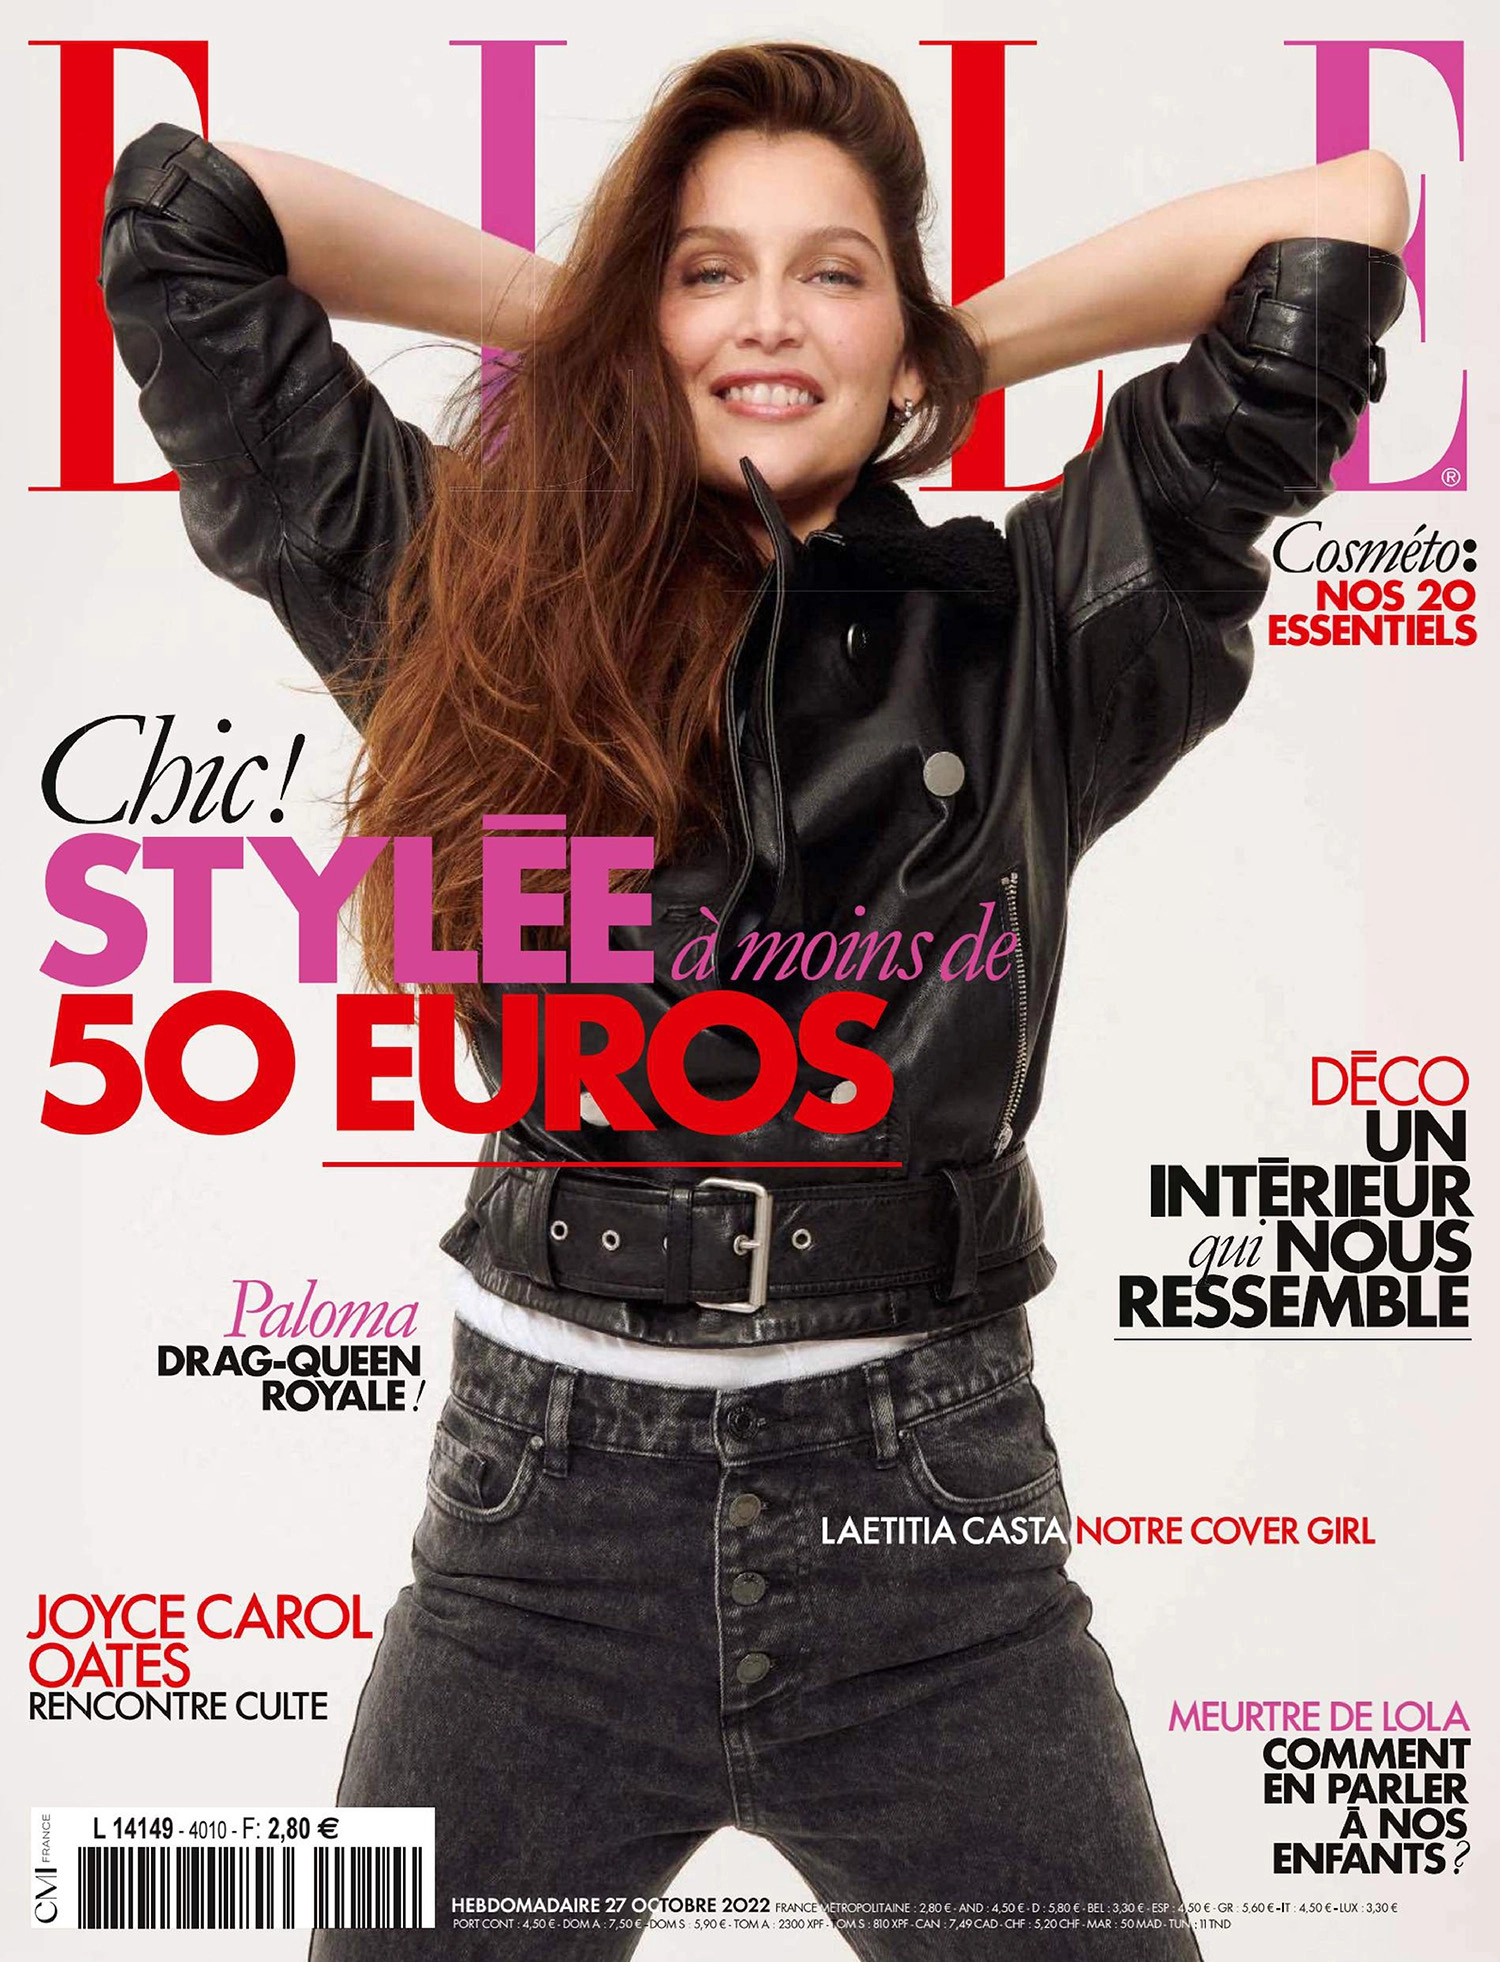 Laetitia Casta covers Elle France October 27th, 2022 by Damien Krisl